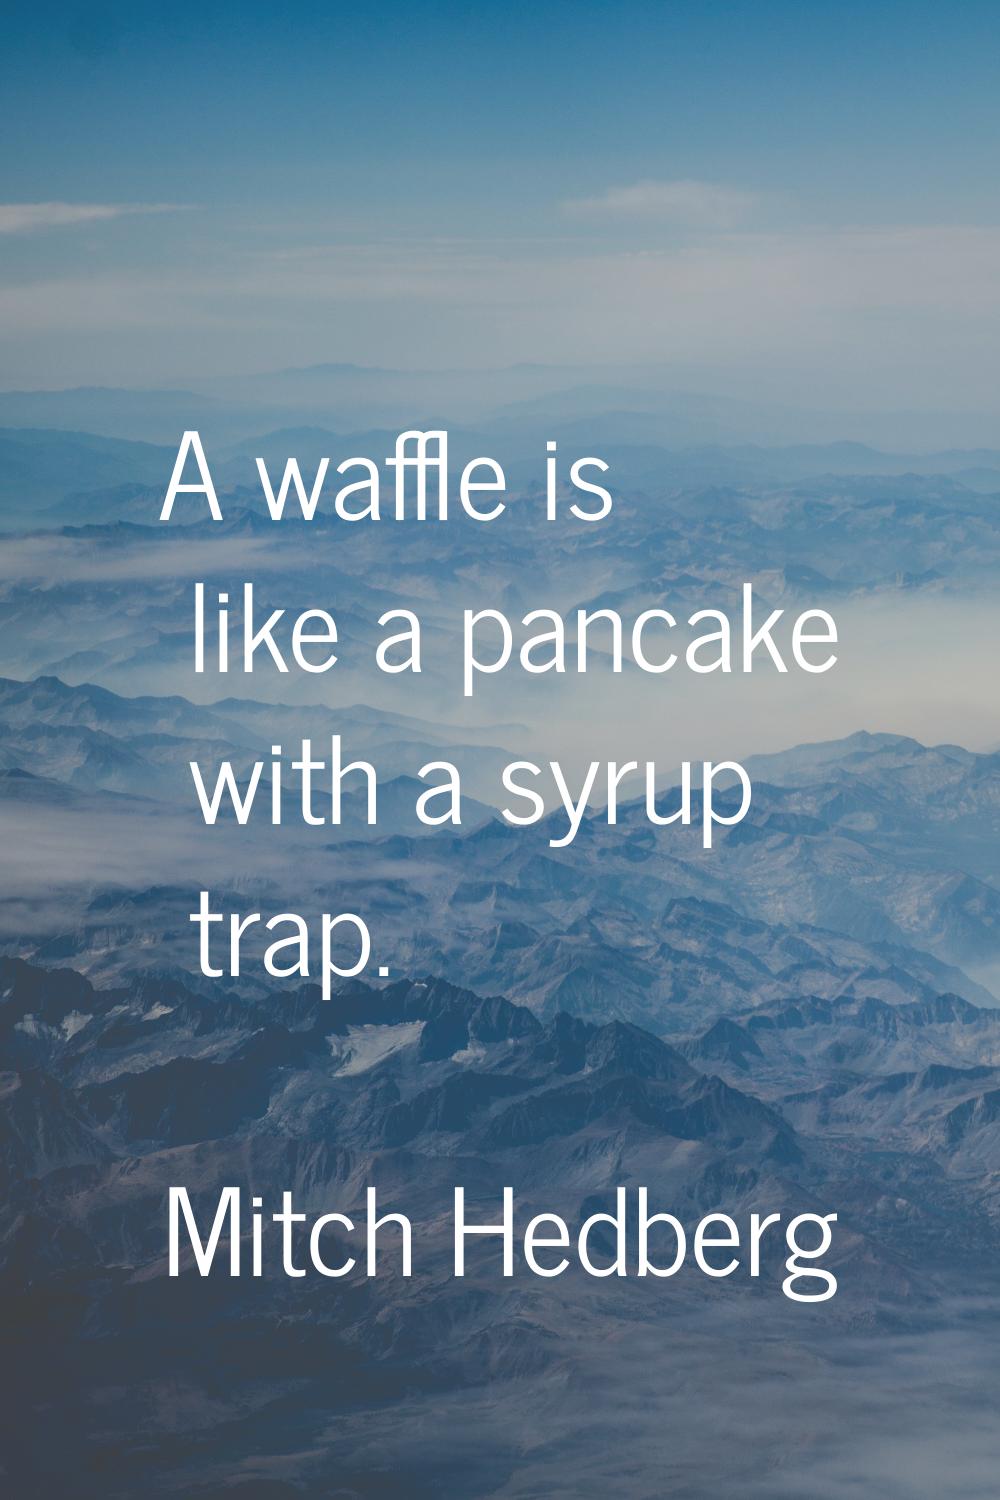 A waffle is like a pancake with a syrup trap.